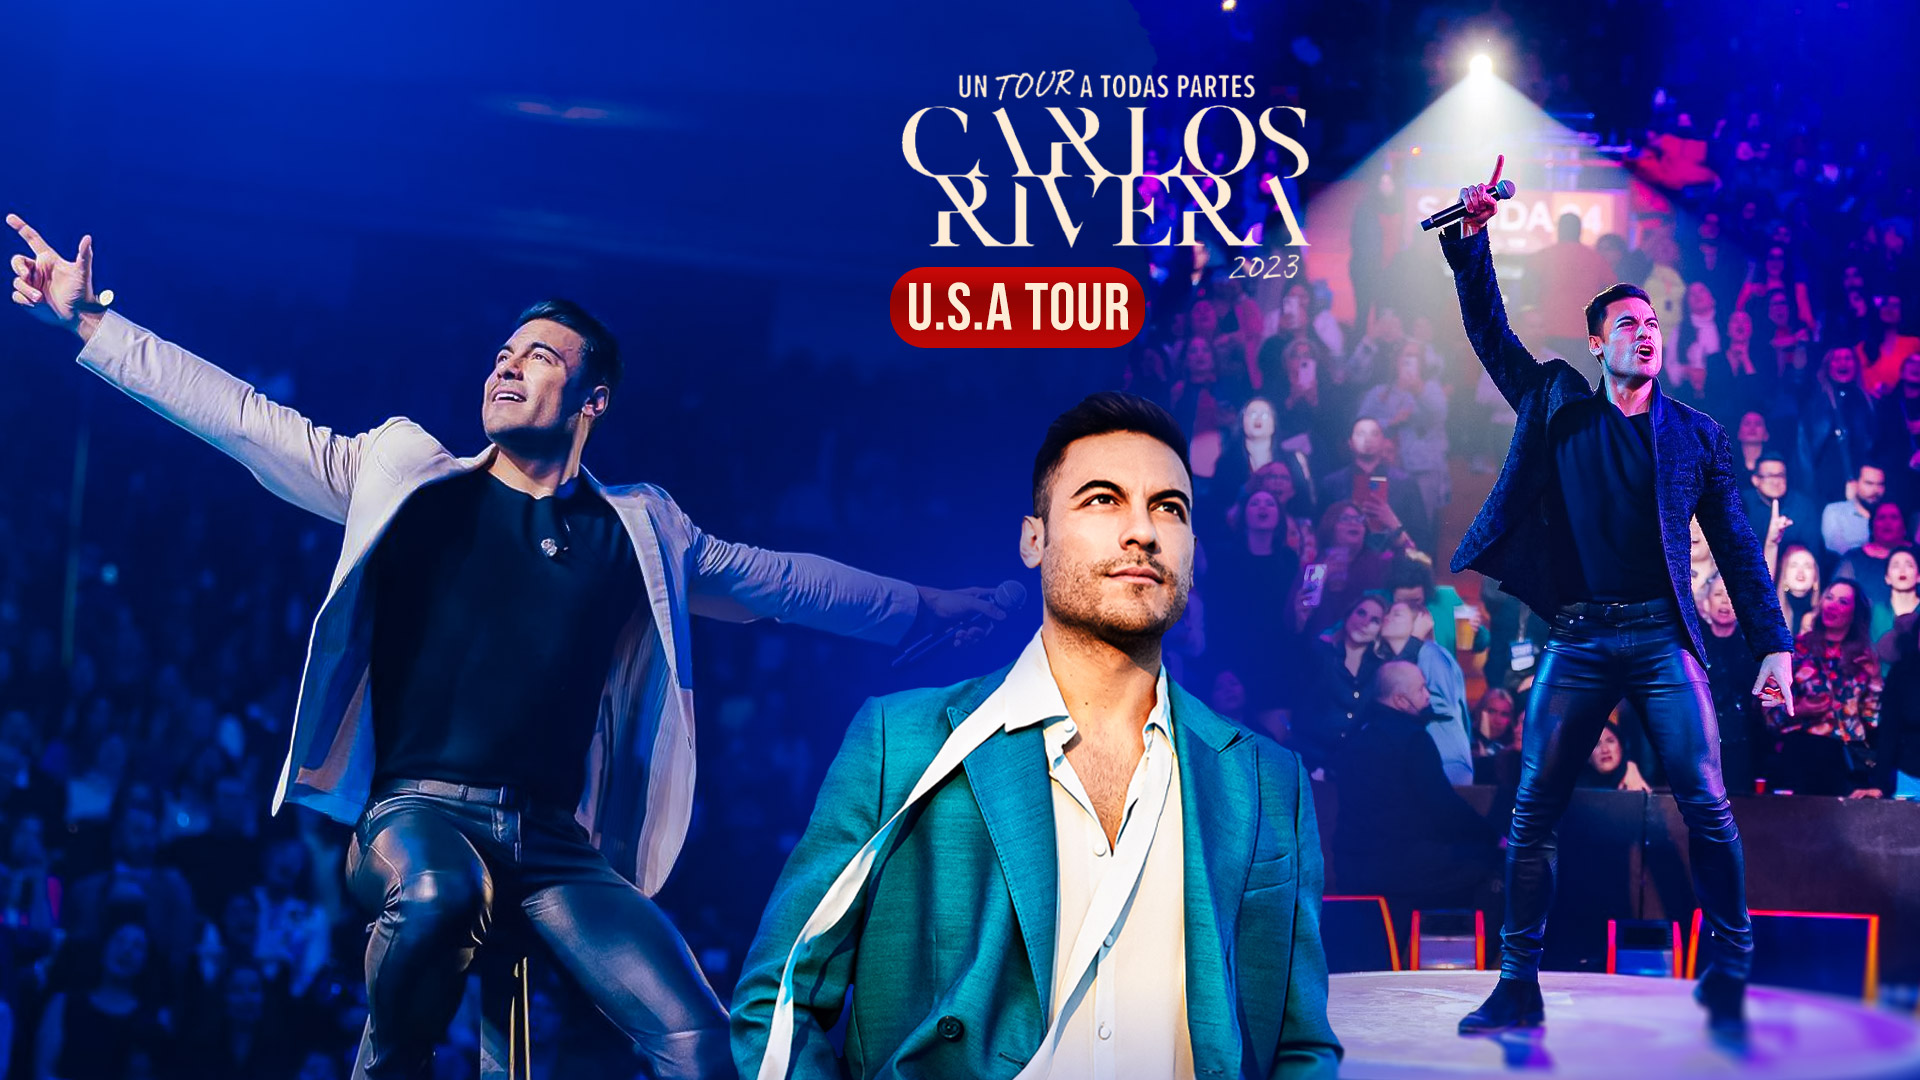 Carlos Rivera - ‘Un Tour A Todas Partes U.S.A 2023’